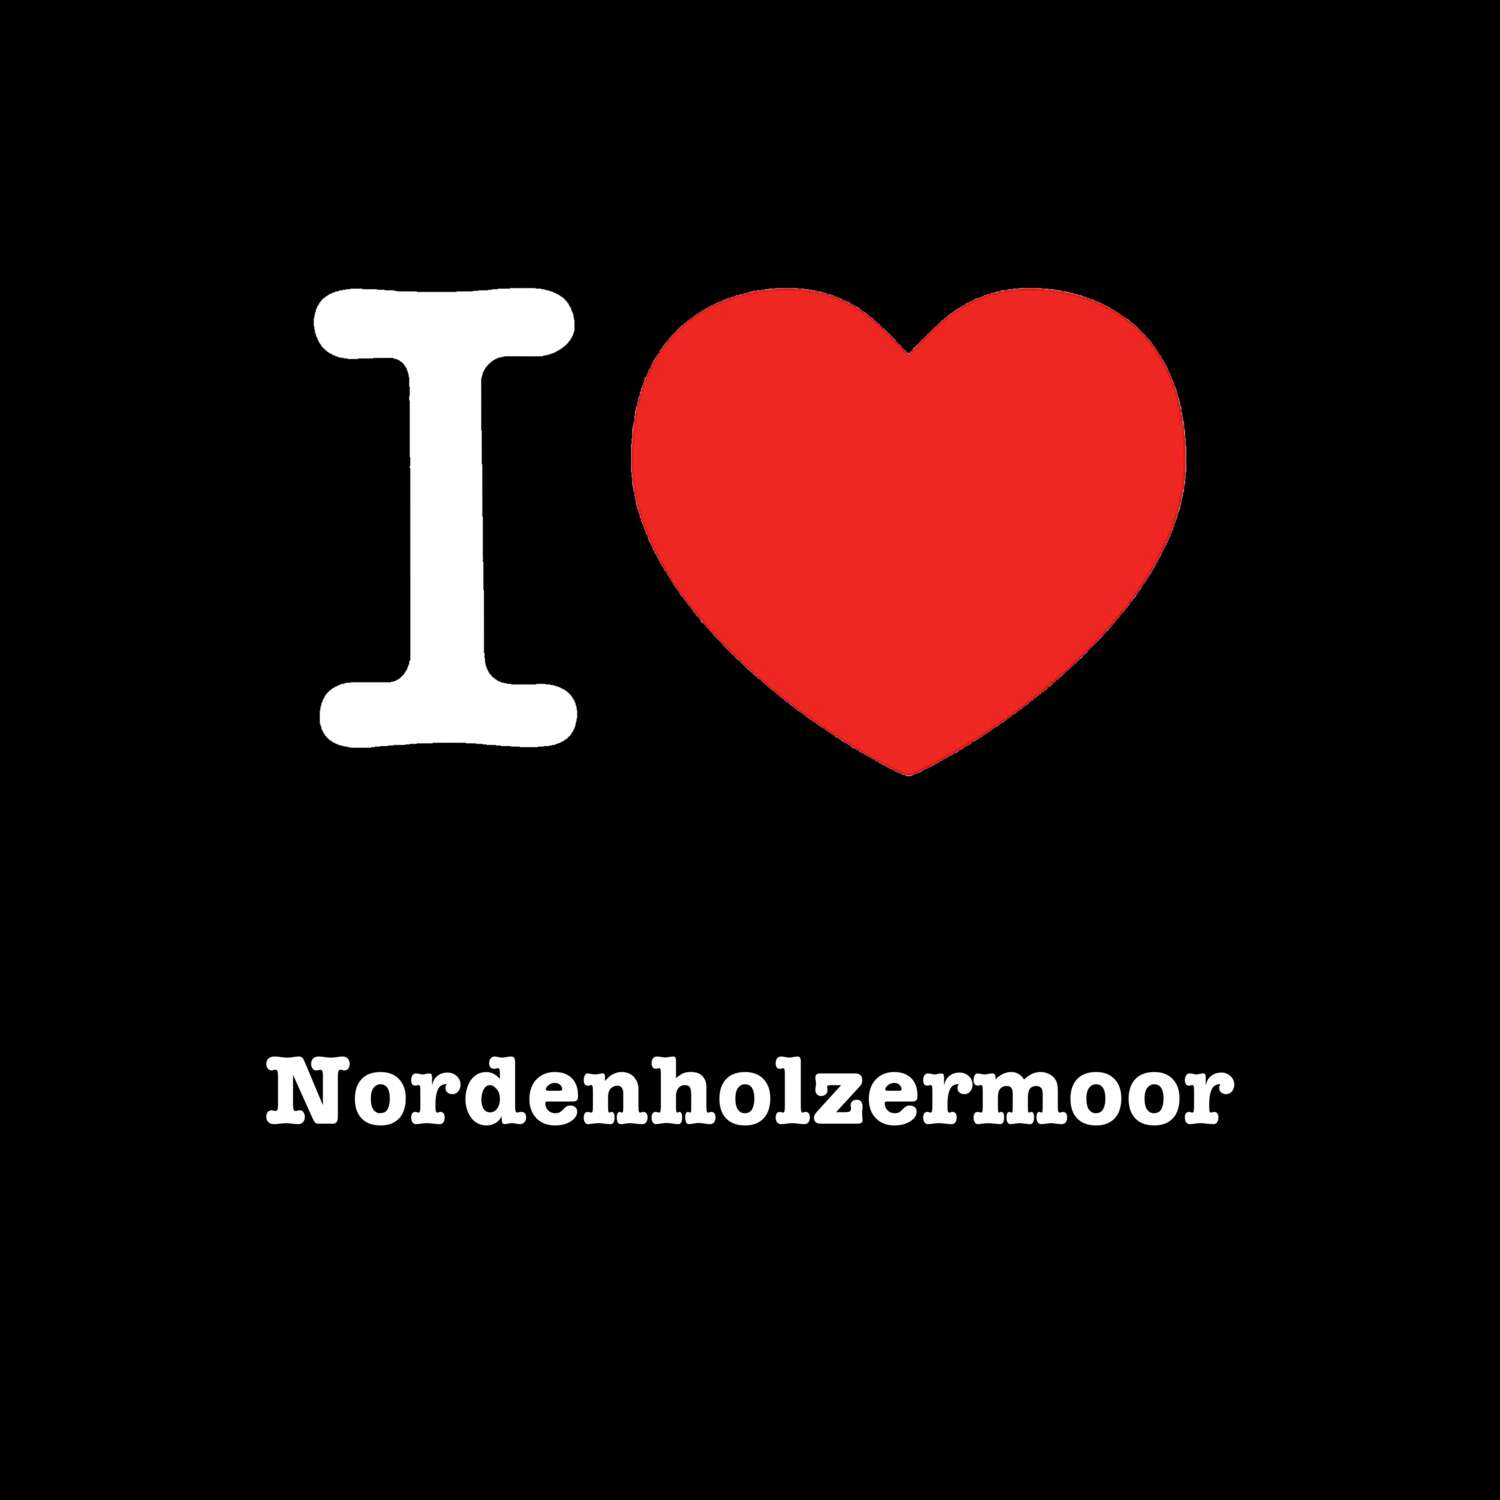 Nordenholzermoor T-Shirt »I love«